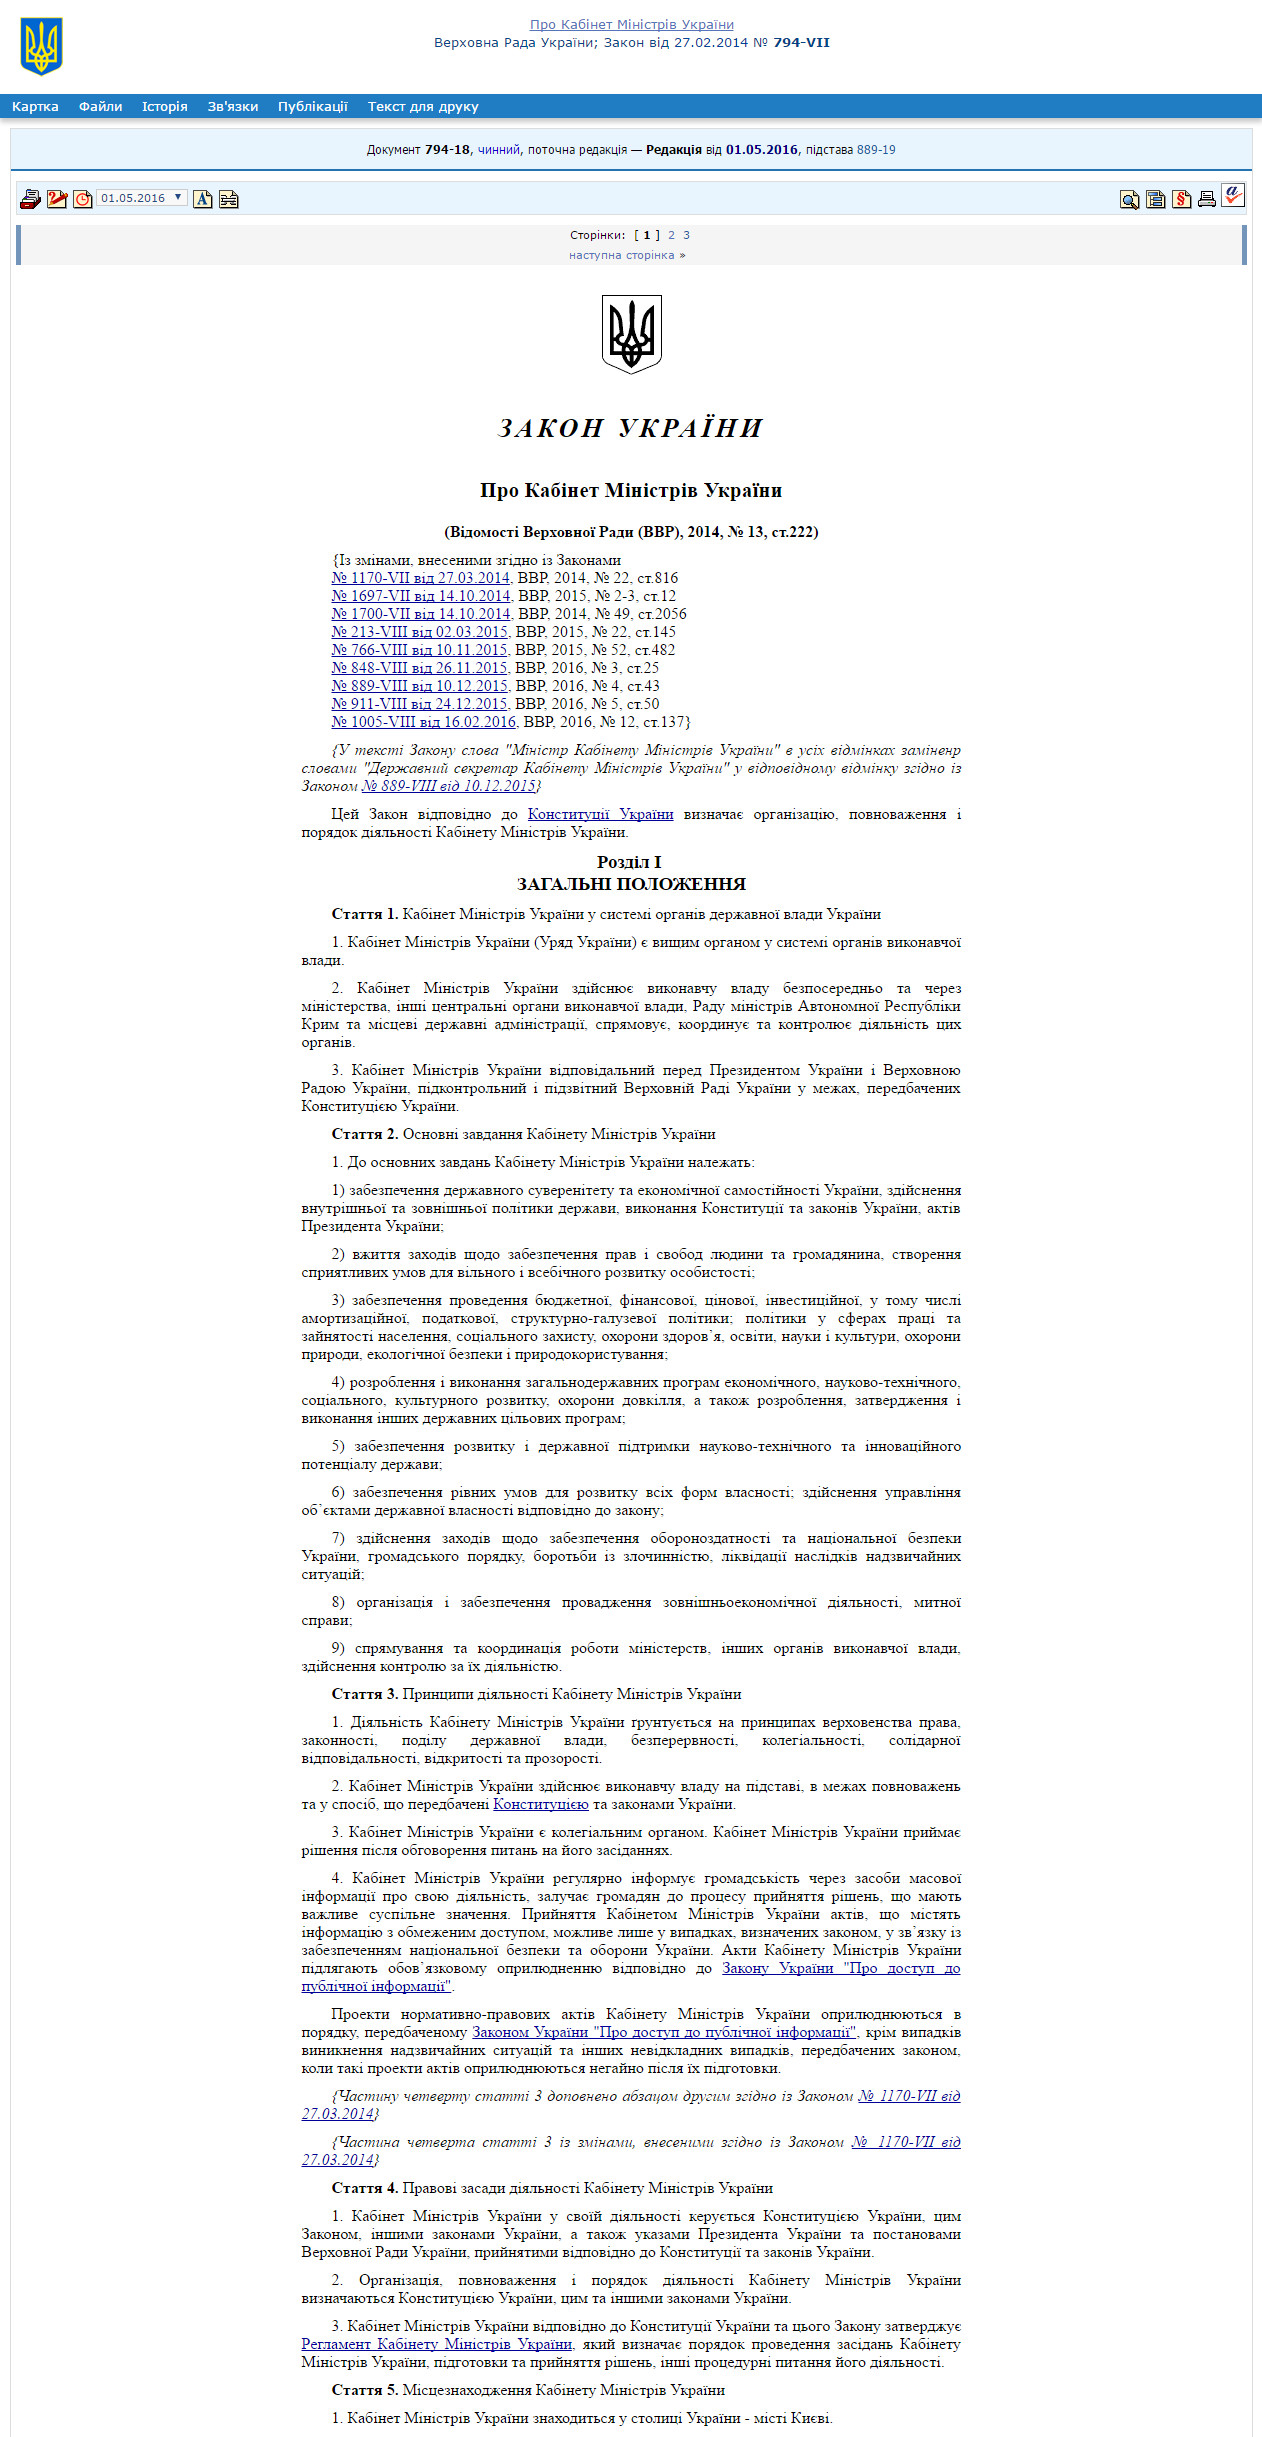 http://zakon5.rada.gov.ua/laws/show/794-18/page